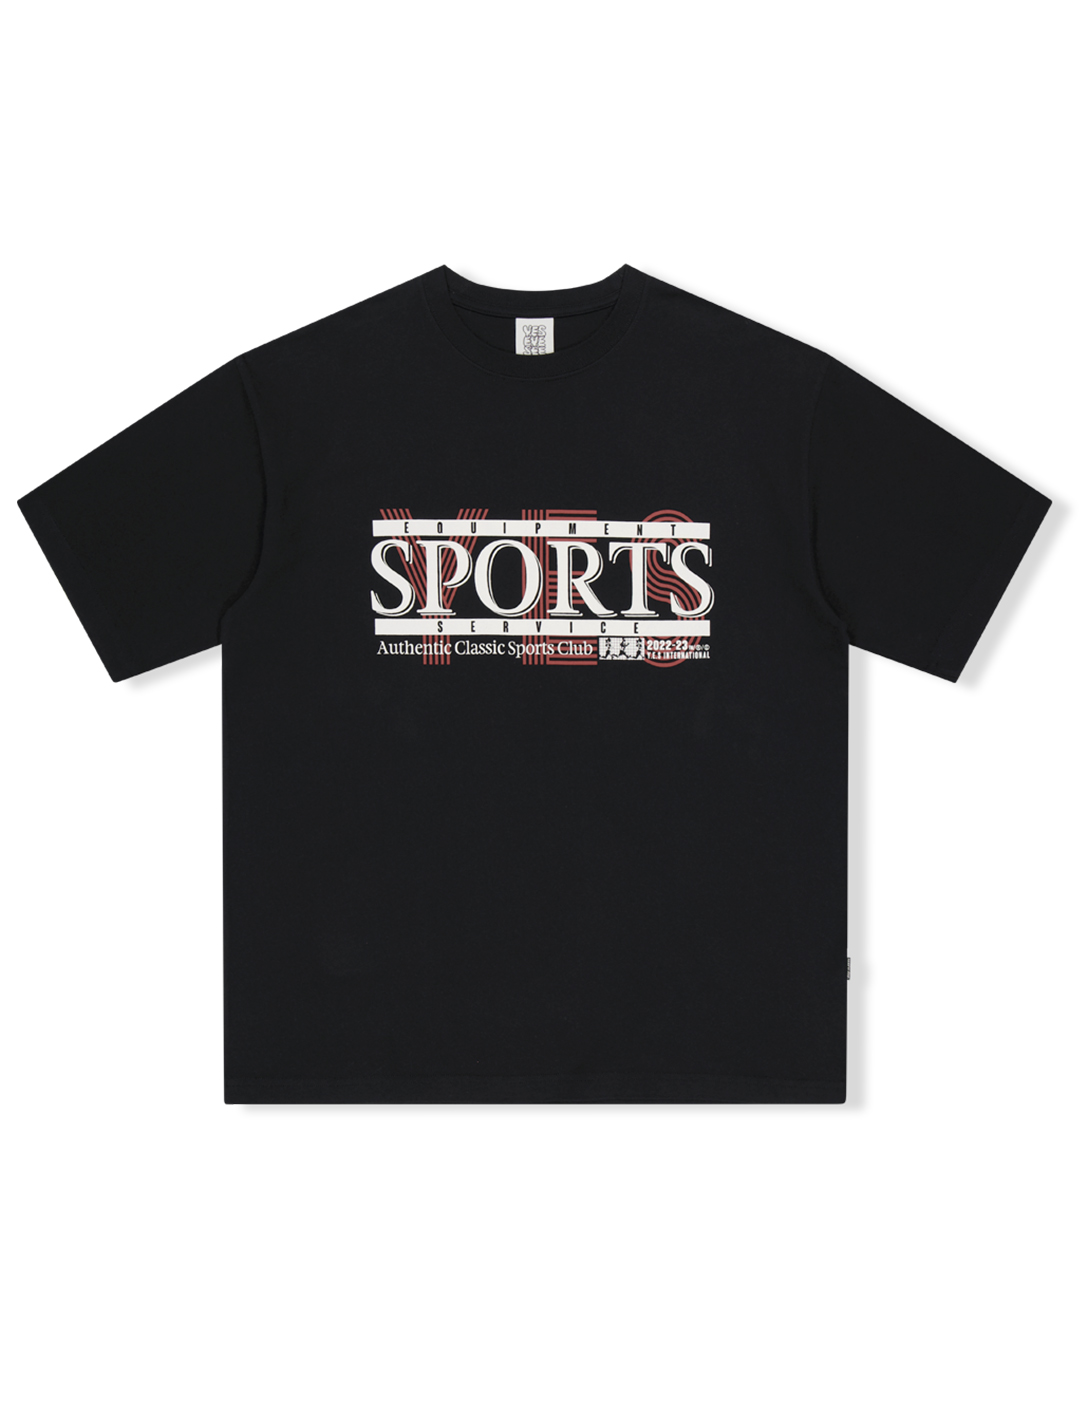 Y.E.S Sports Tee Black